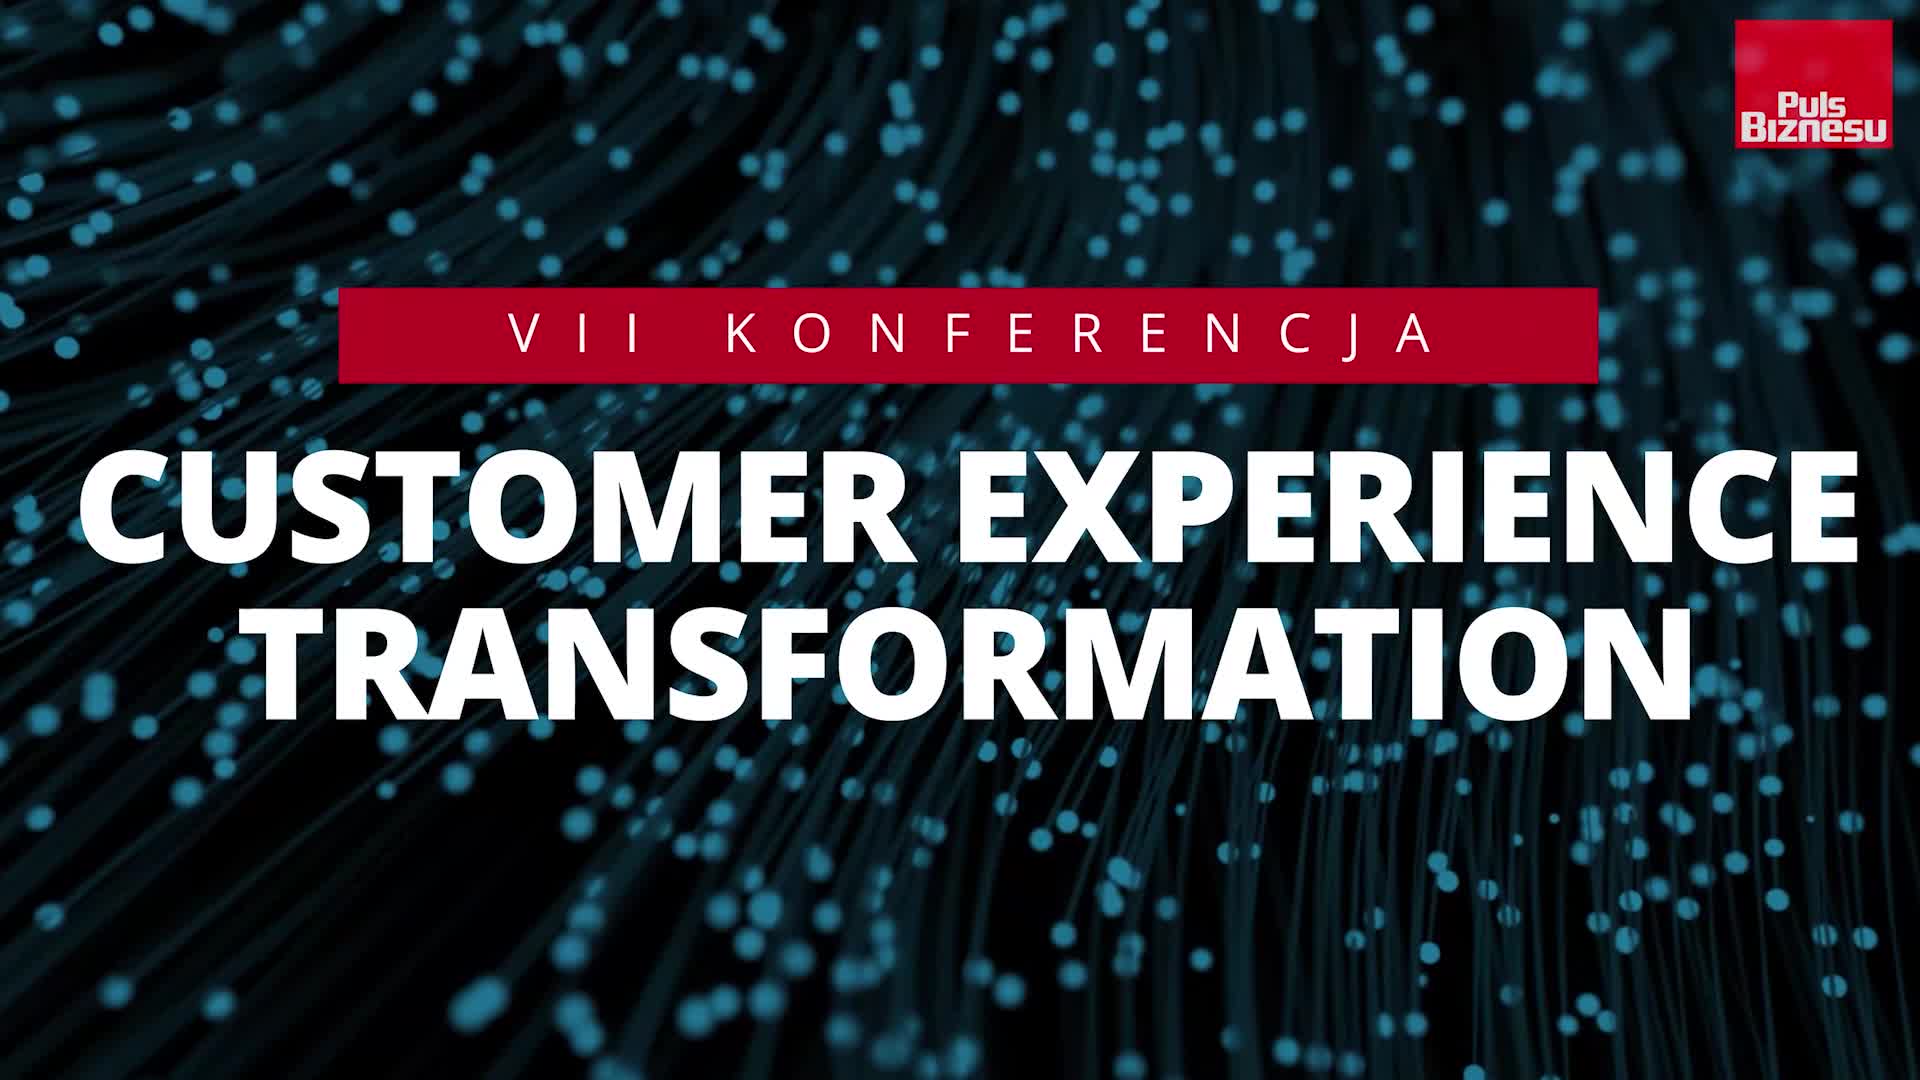 VII Konferencja Customer Experience Transformation